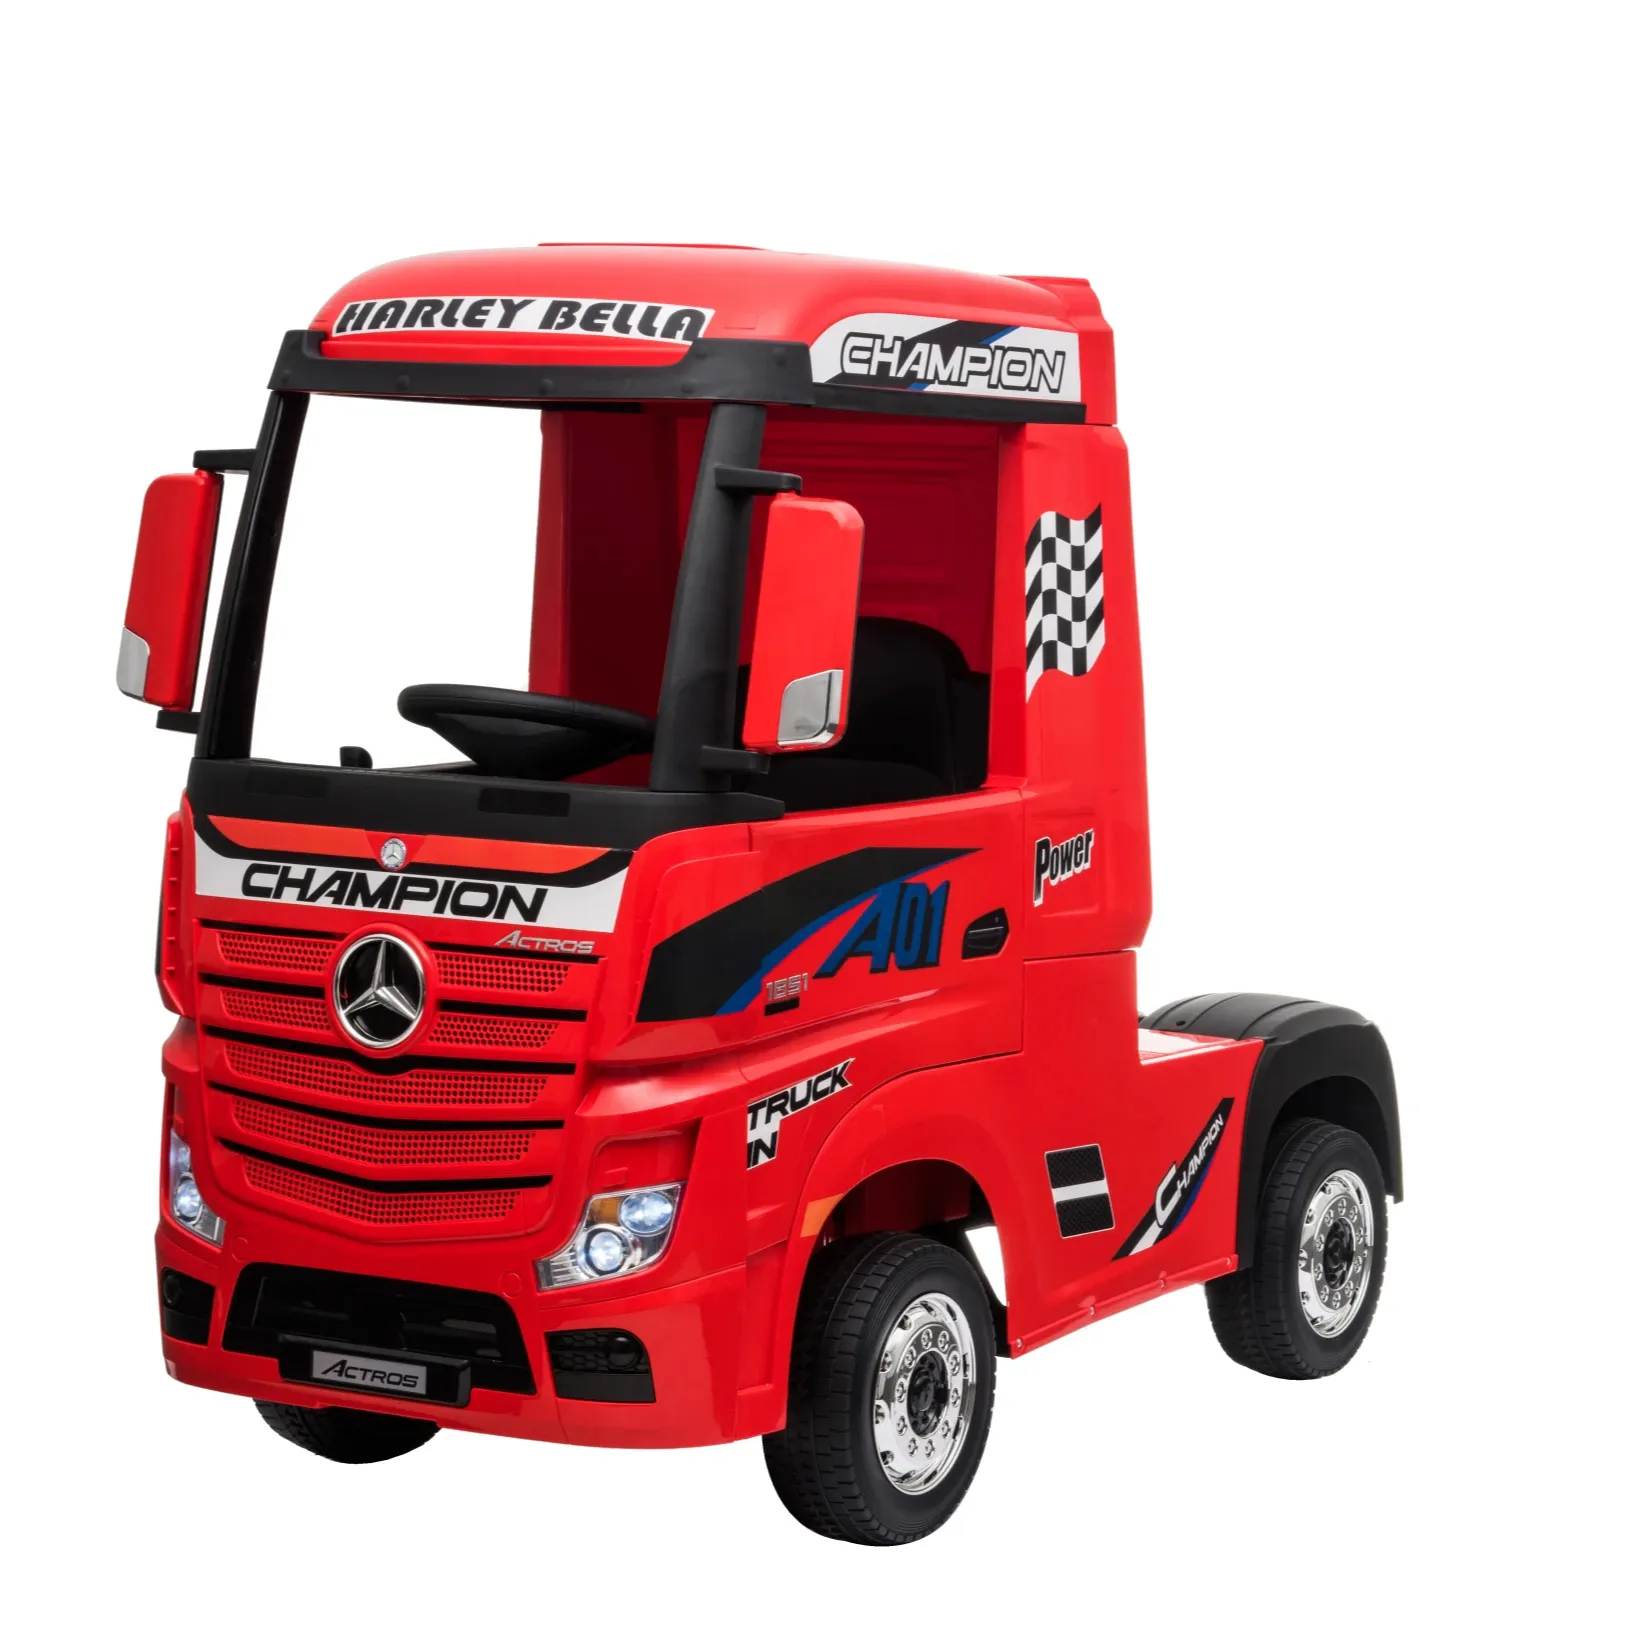 2023 Venda QUENTE Mercedes Benz Actros Truck Licenciado Toy Car Crianças Passeio Elétrico No Carro